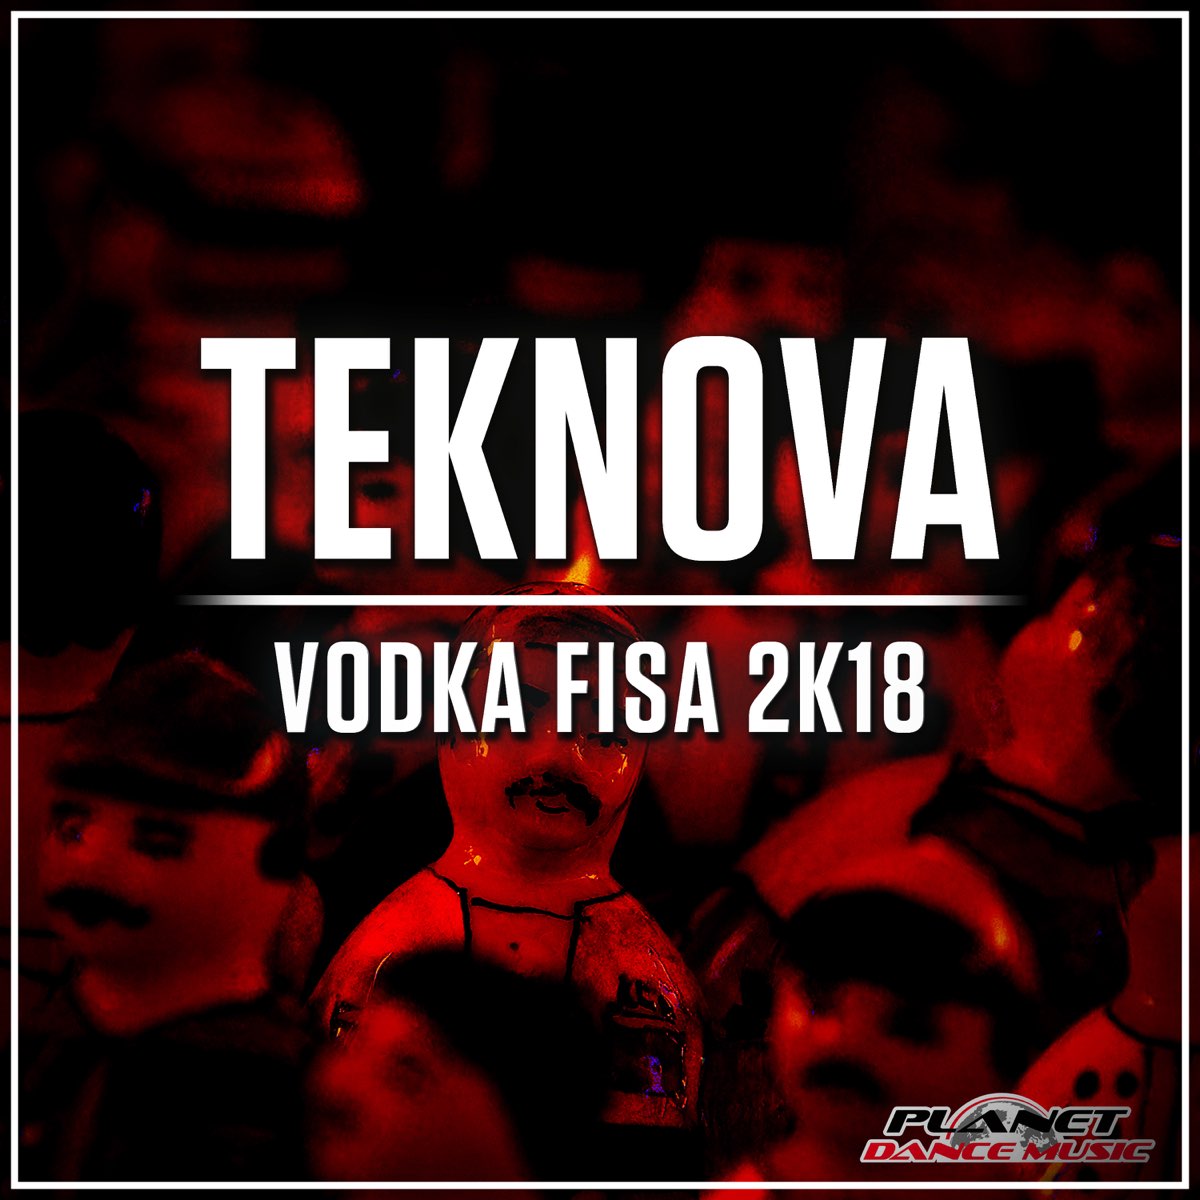 Vodka Fisa 2K18 - Single – Album par Teknova – Apple Music